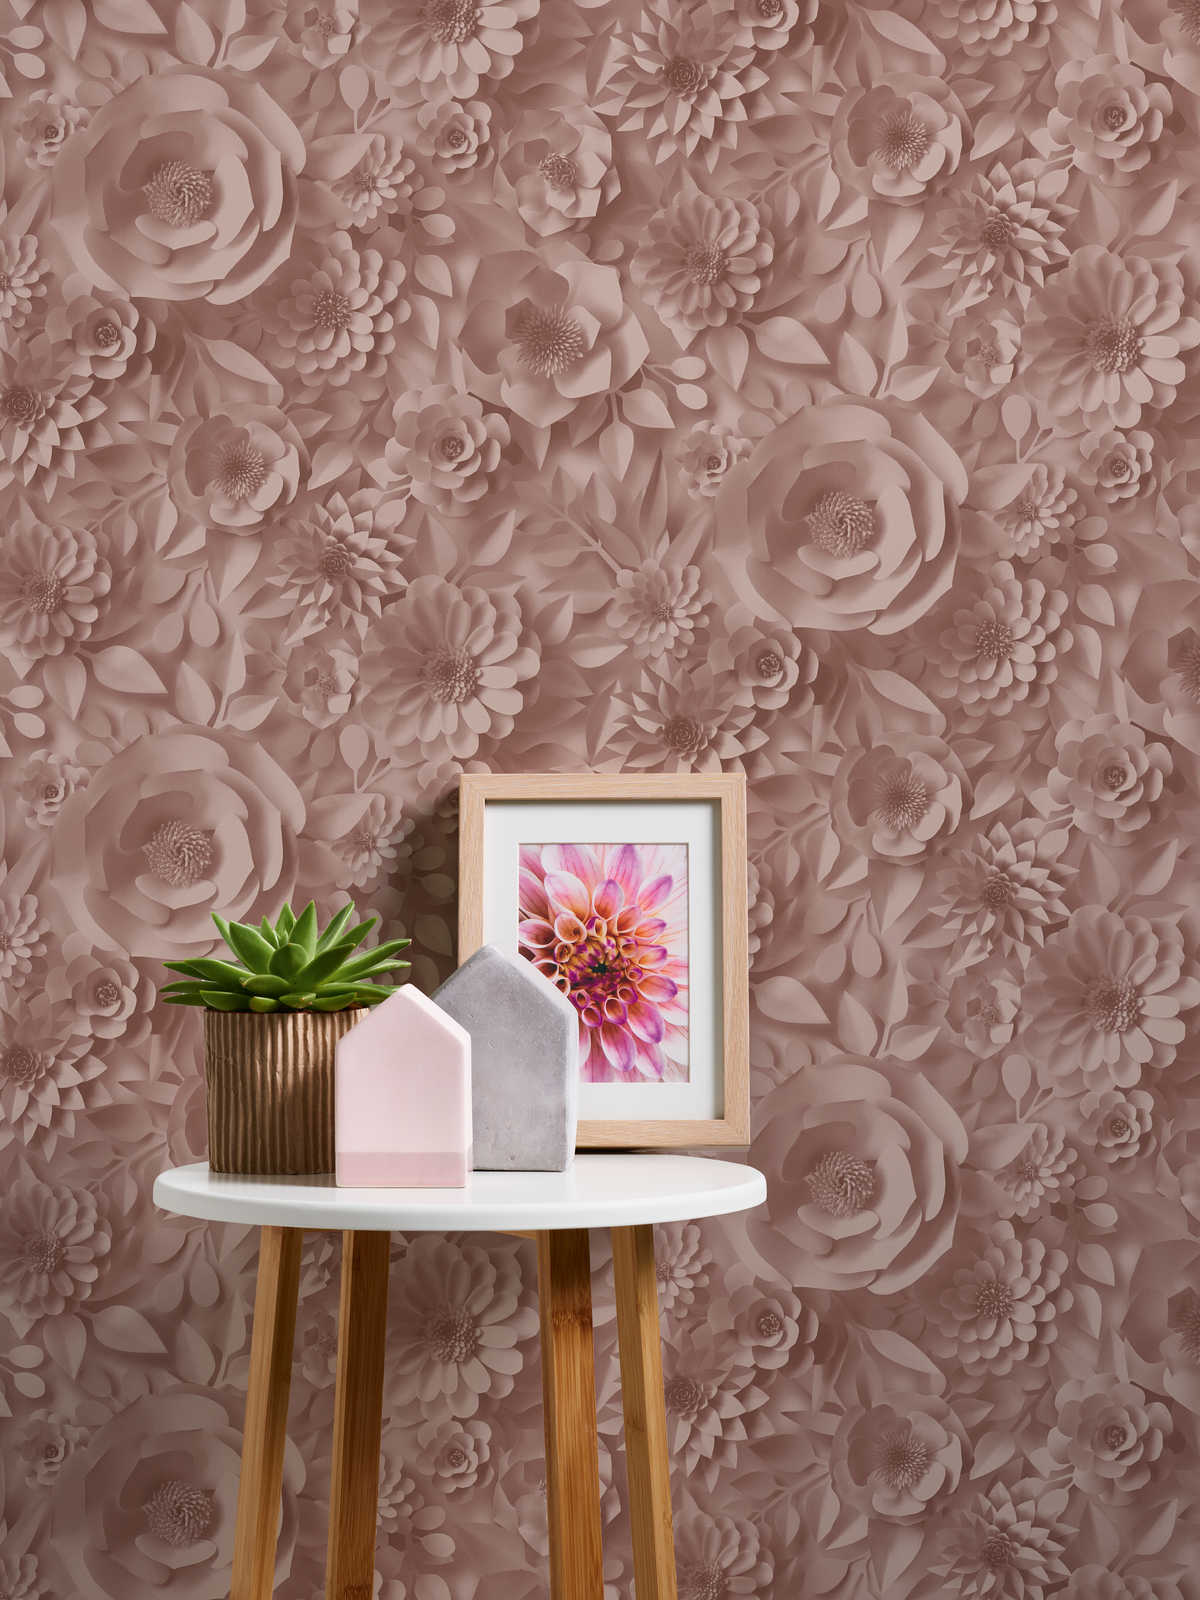             3D Tapete mit Papierblumen, Grafik Blüten-Muster – Rosa
        